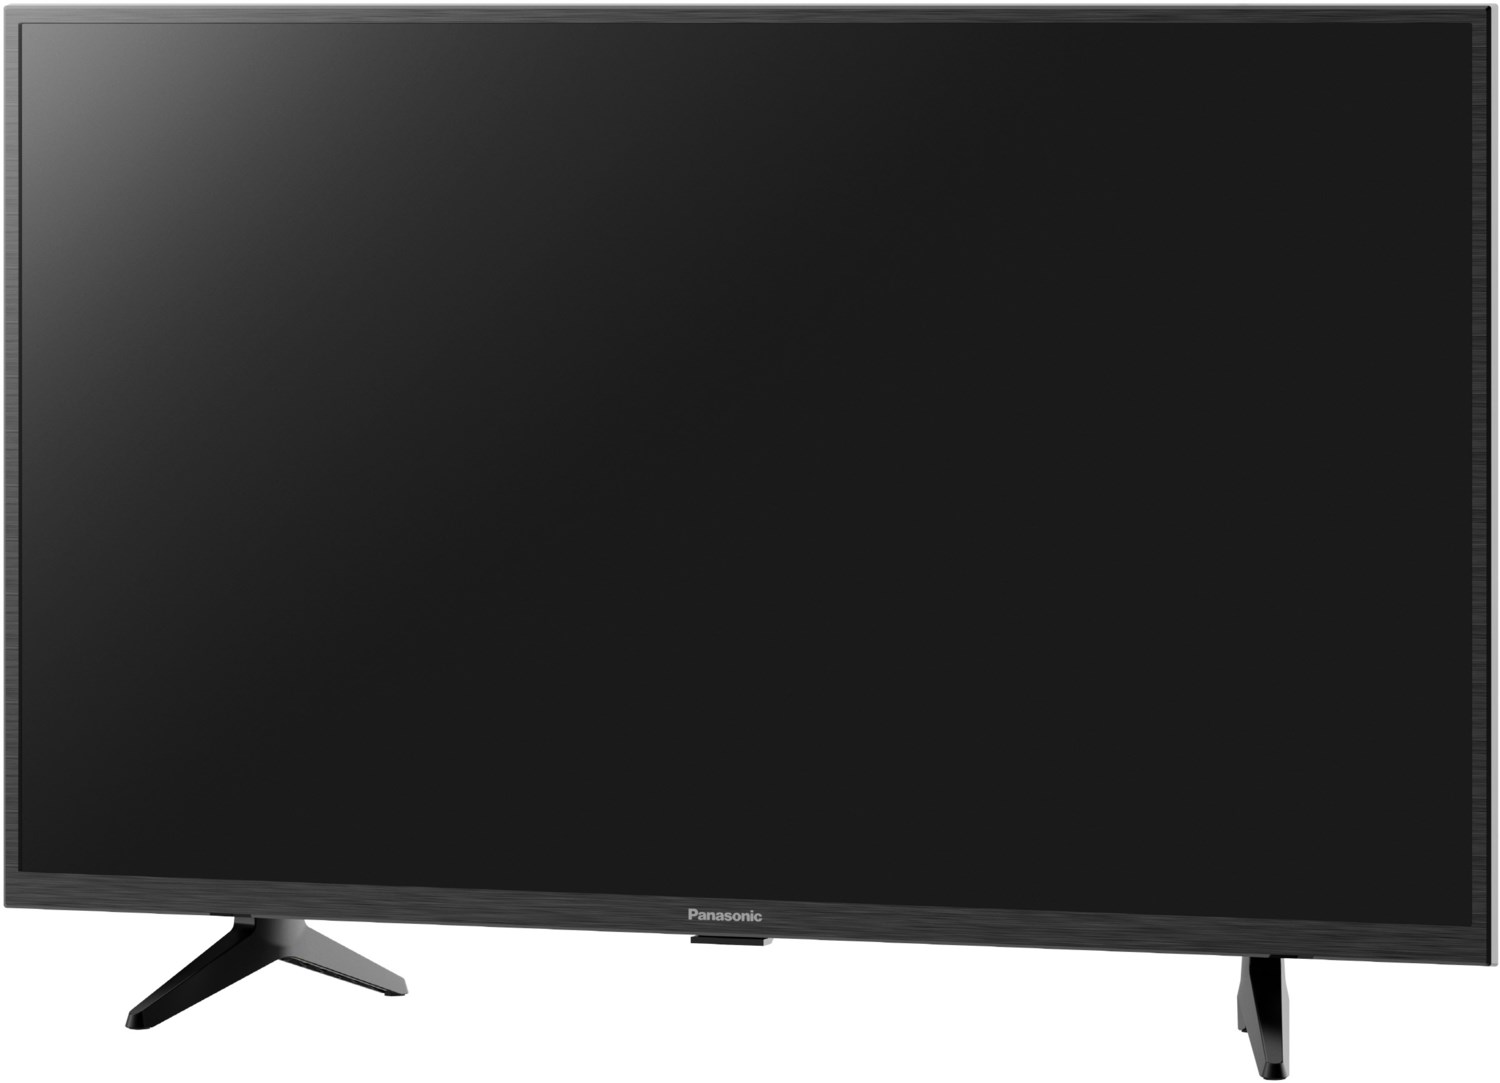 Panasonic 32 Zoll (80 cm) HD Smart TV schwarz